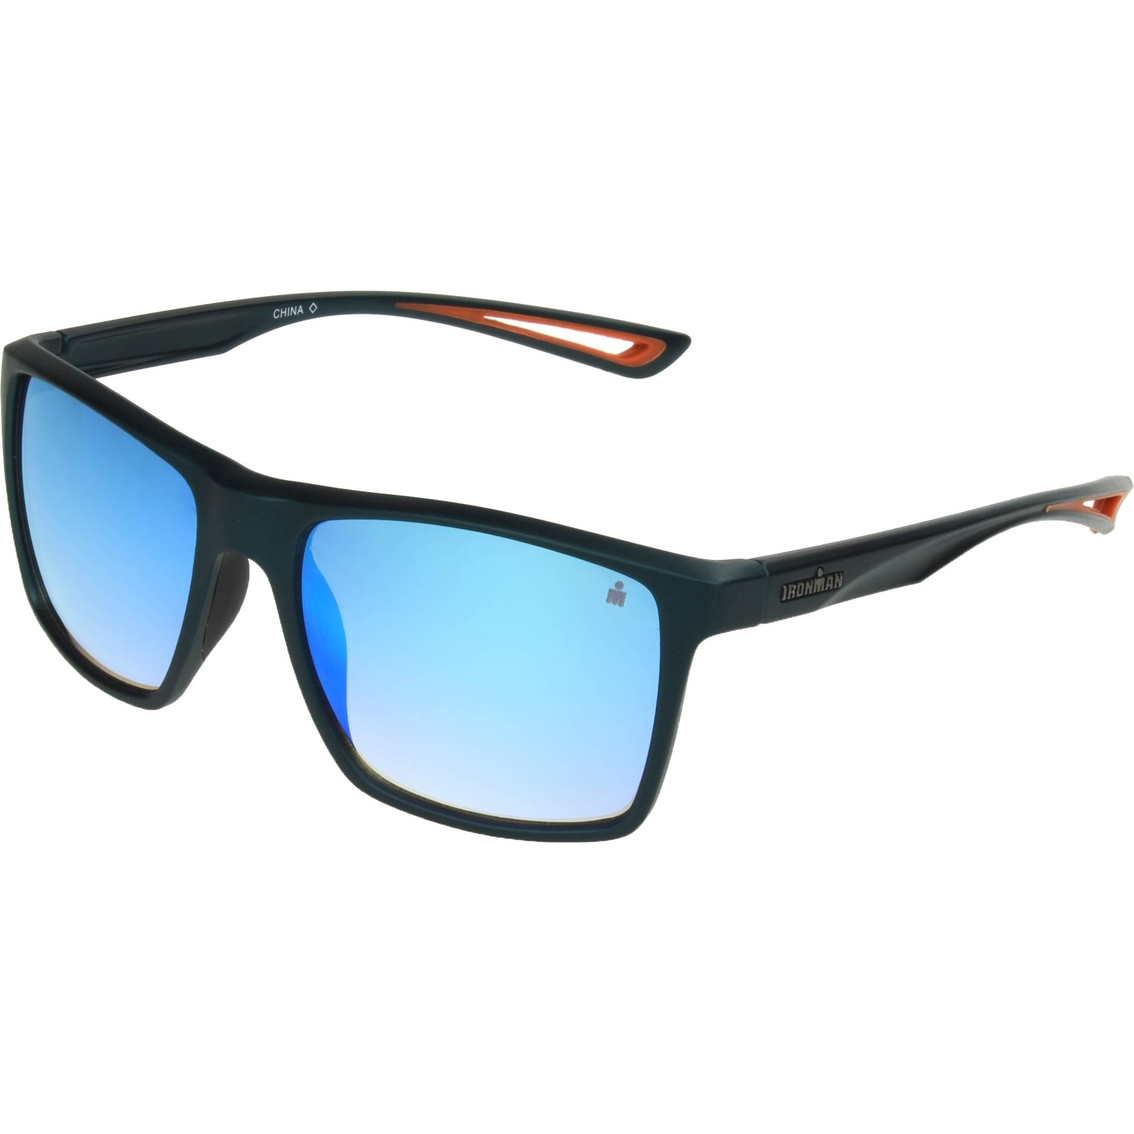 Foster Grant Ironman Non-polar Dark Pine Wayfarer Sunglasses 10250332.cgr, Sunglasses, Clothing & Accessories